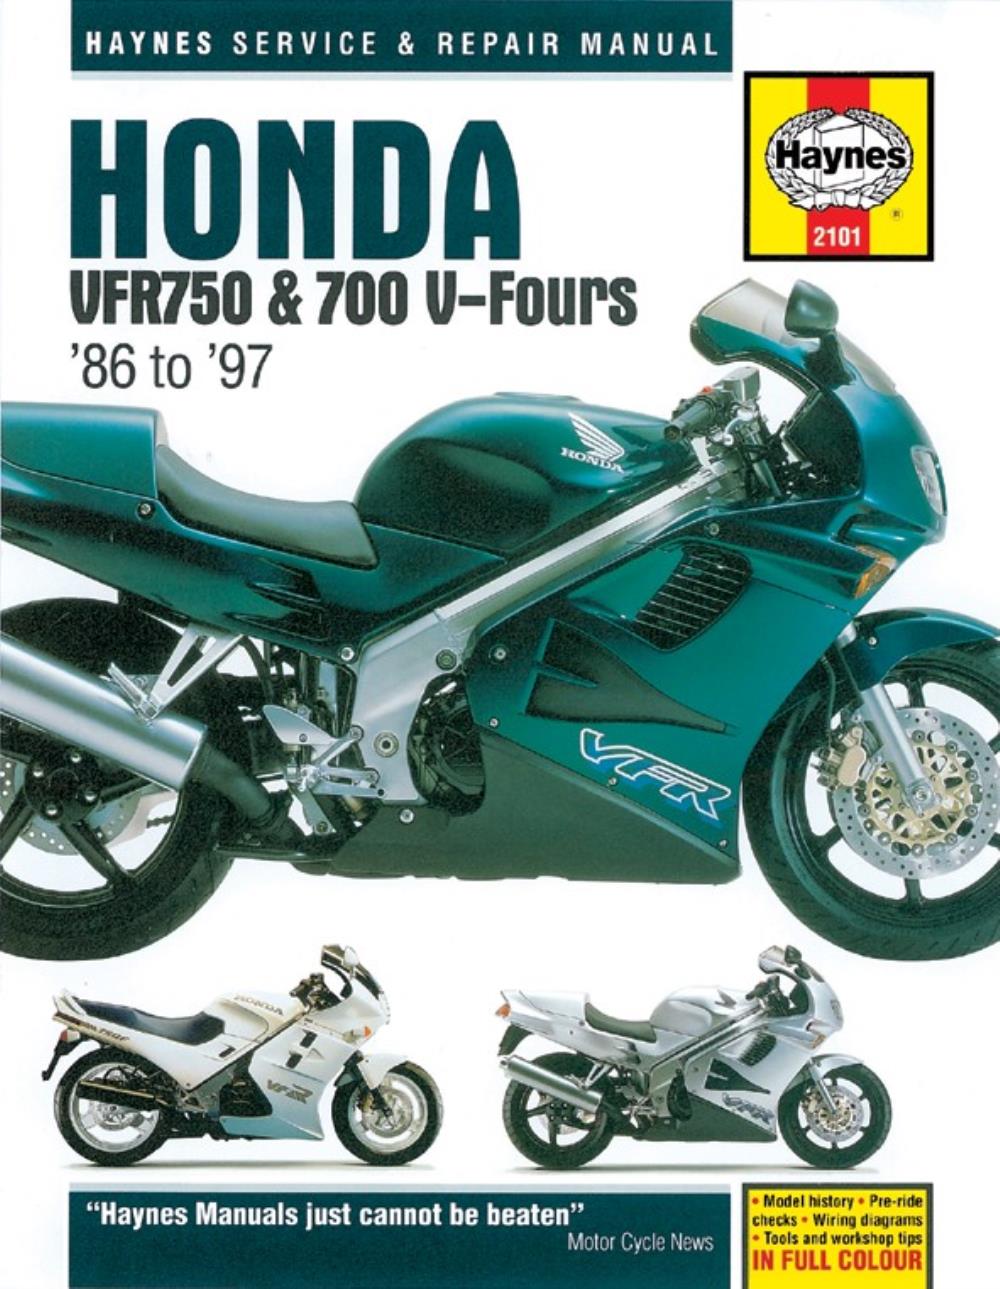 Manual Haynes for 1988 Honda VFR 750 FJ (RC24) eBay